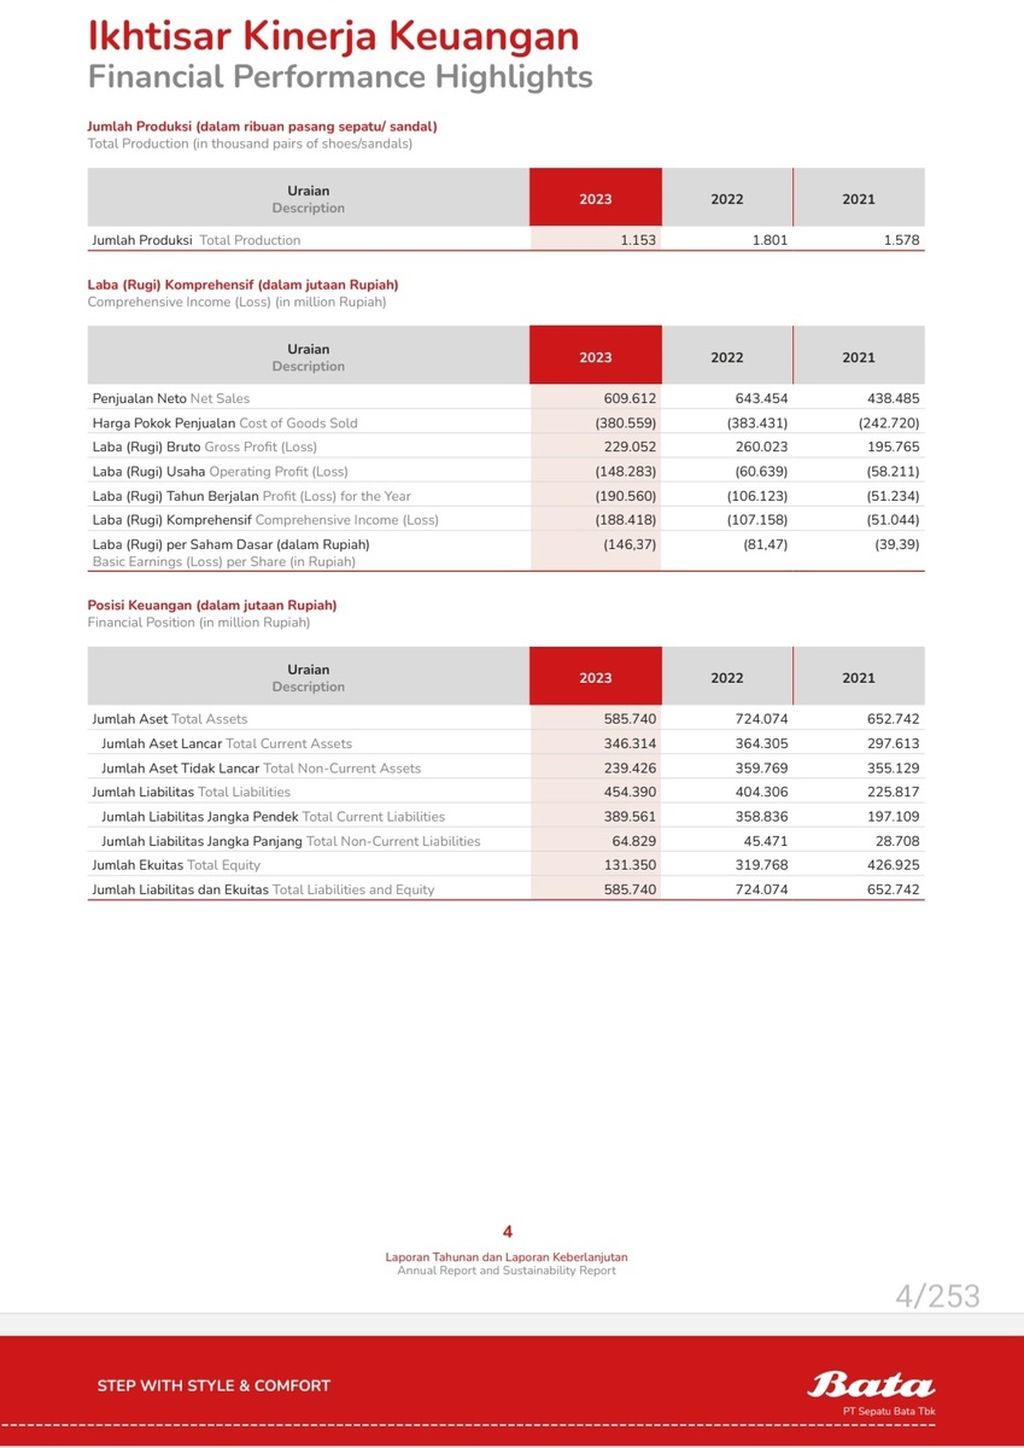 Ikhtisar Keuangan Bata 2023. Sumber: Laporan Tahunan Bata 2023